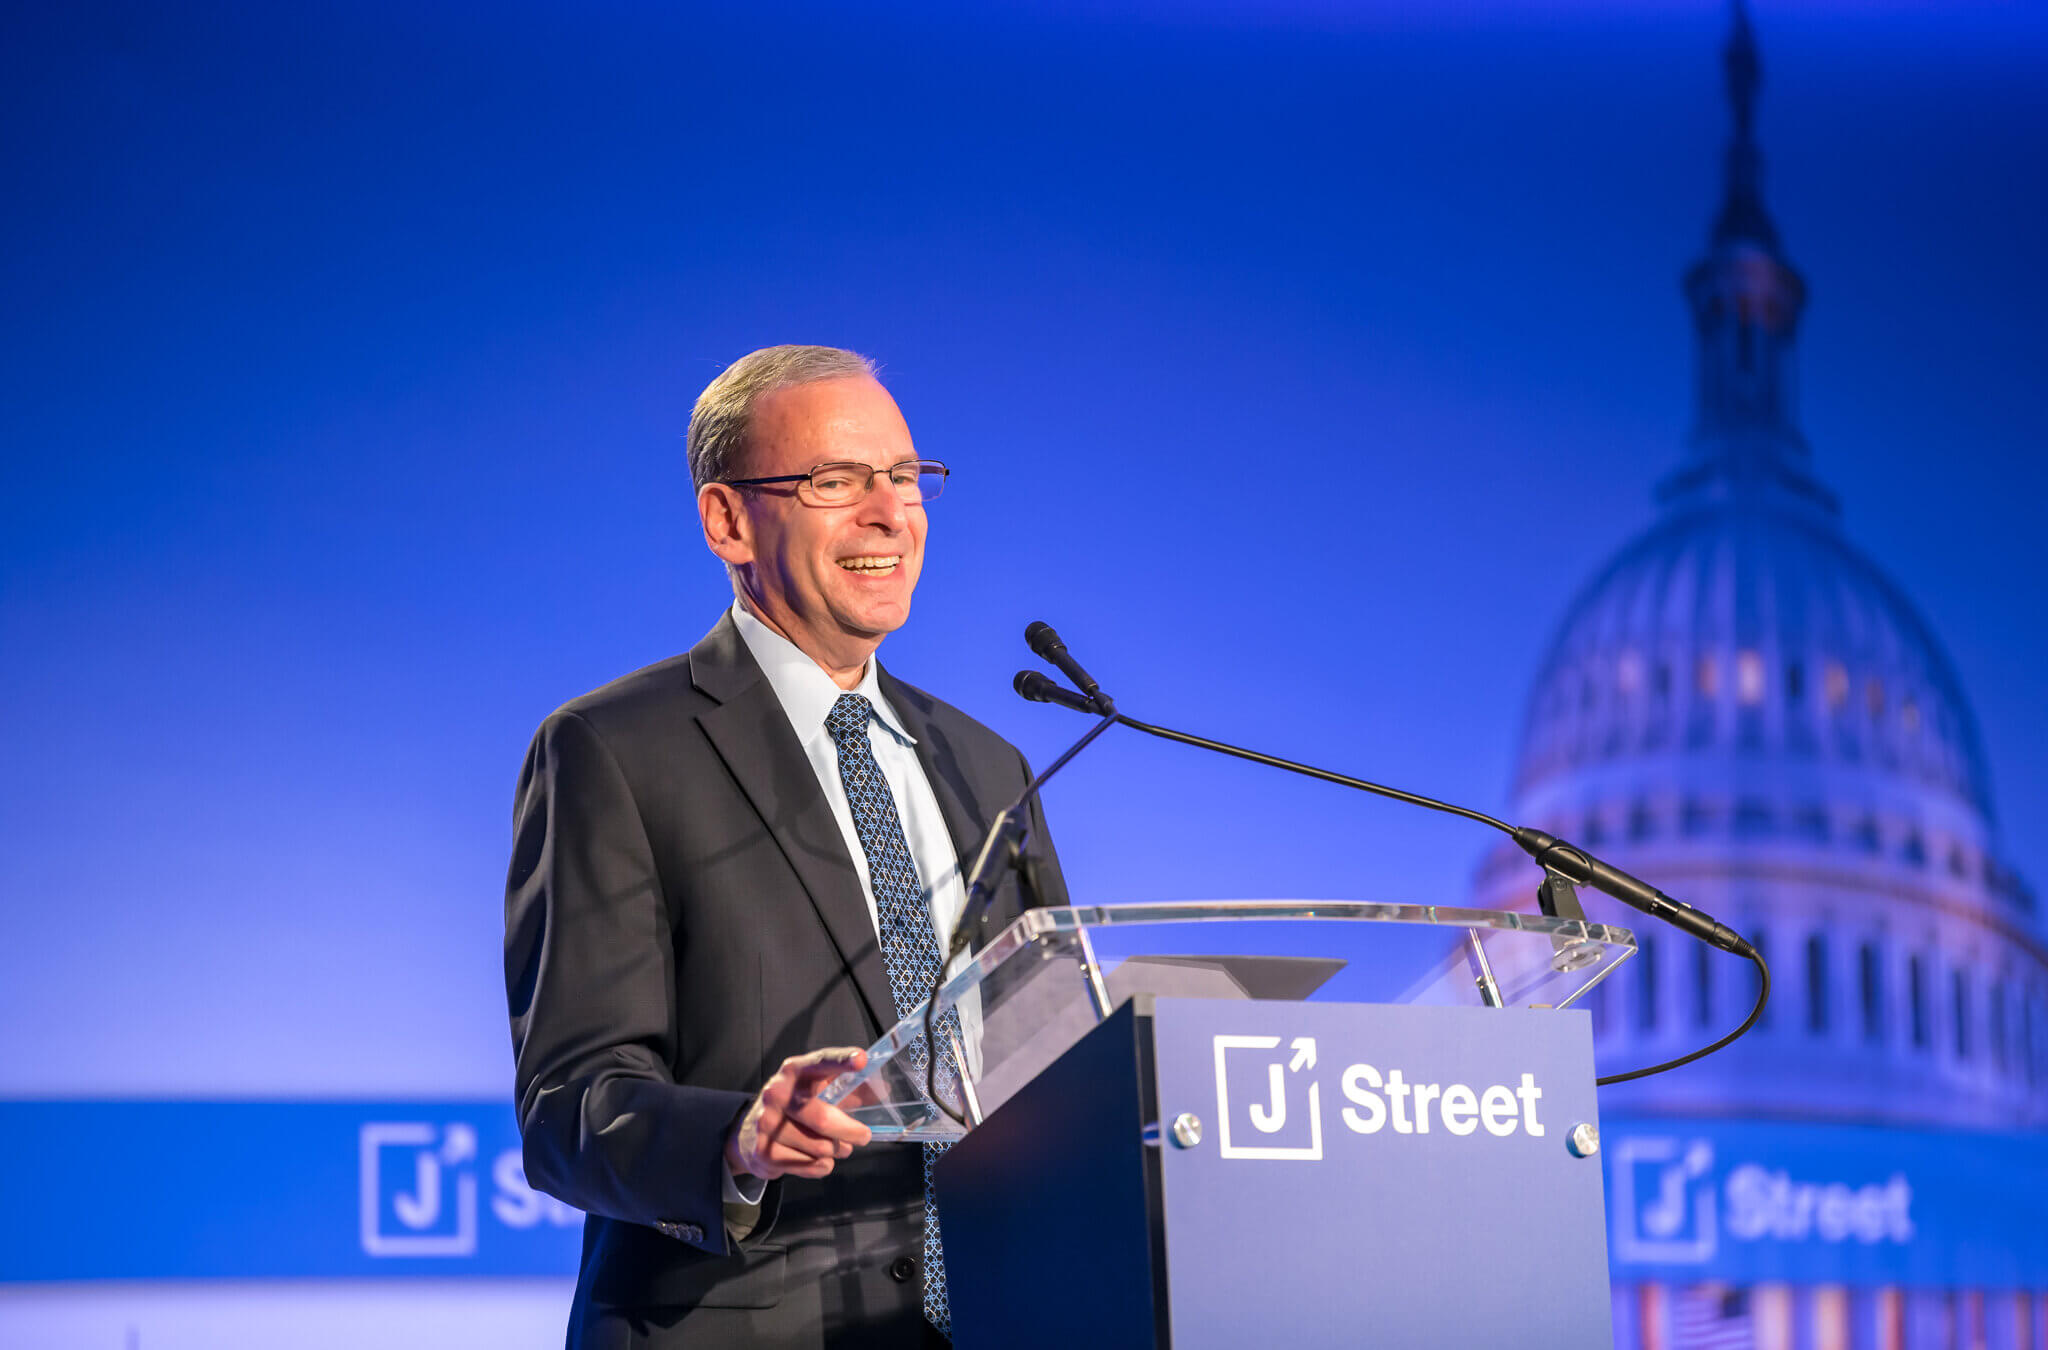 J Street President Jeremy Ben-Ami at J Street's 2022 national conference in Washington, D.C., on Dec. 4, 2022.